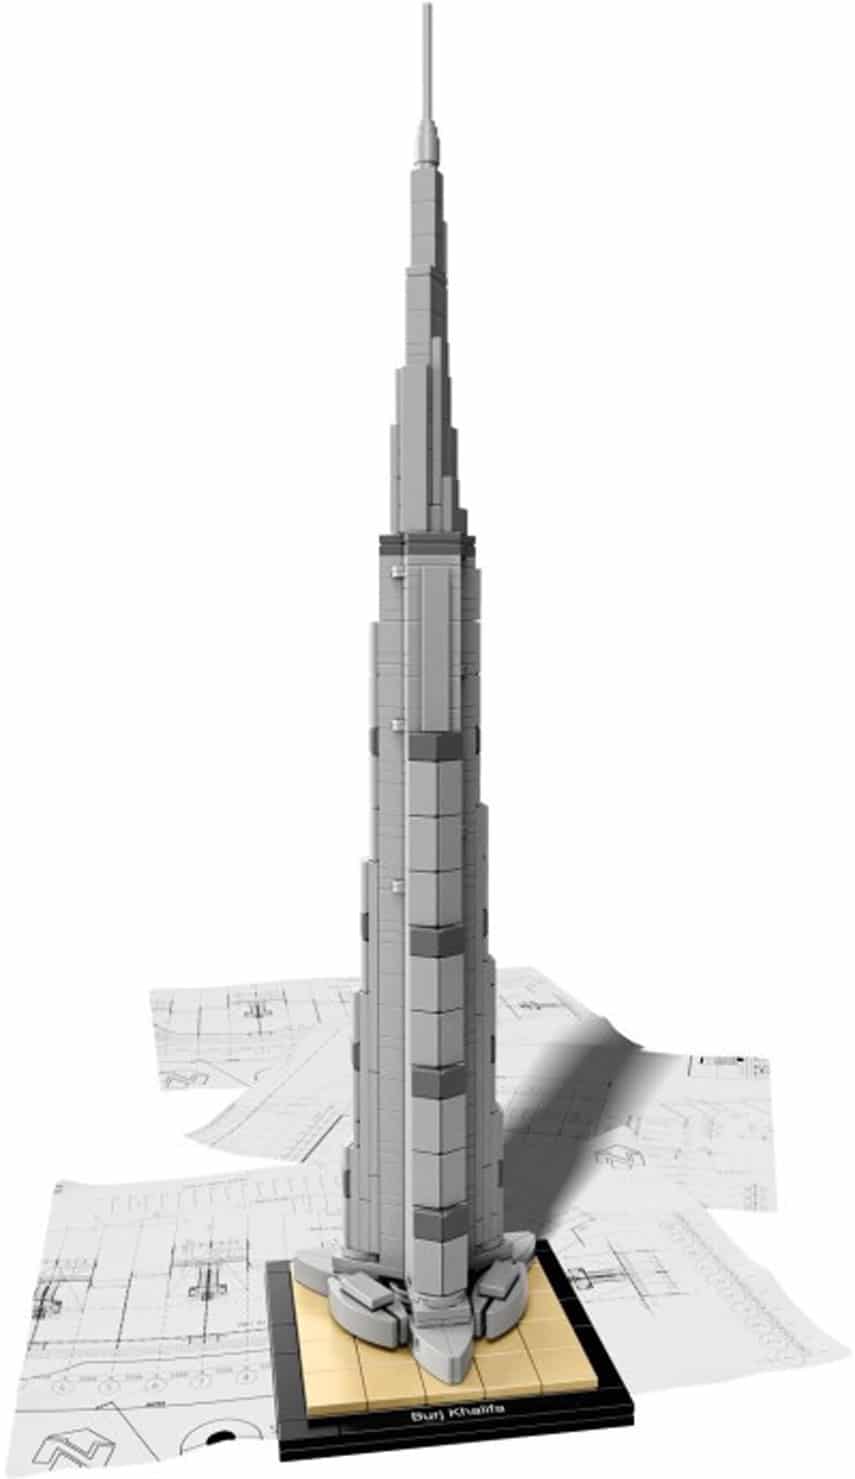 lego-architecture-burj-khalifa_21031-1